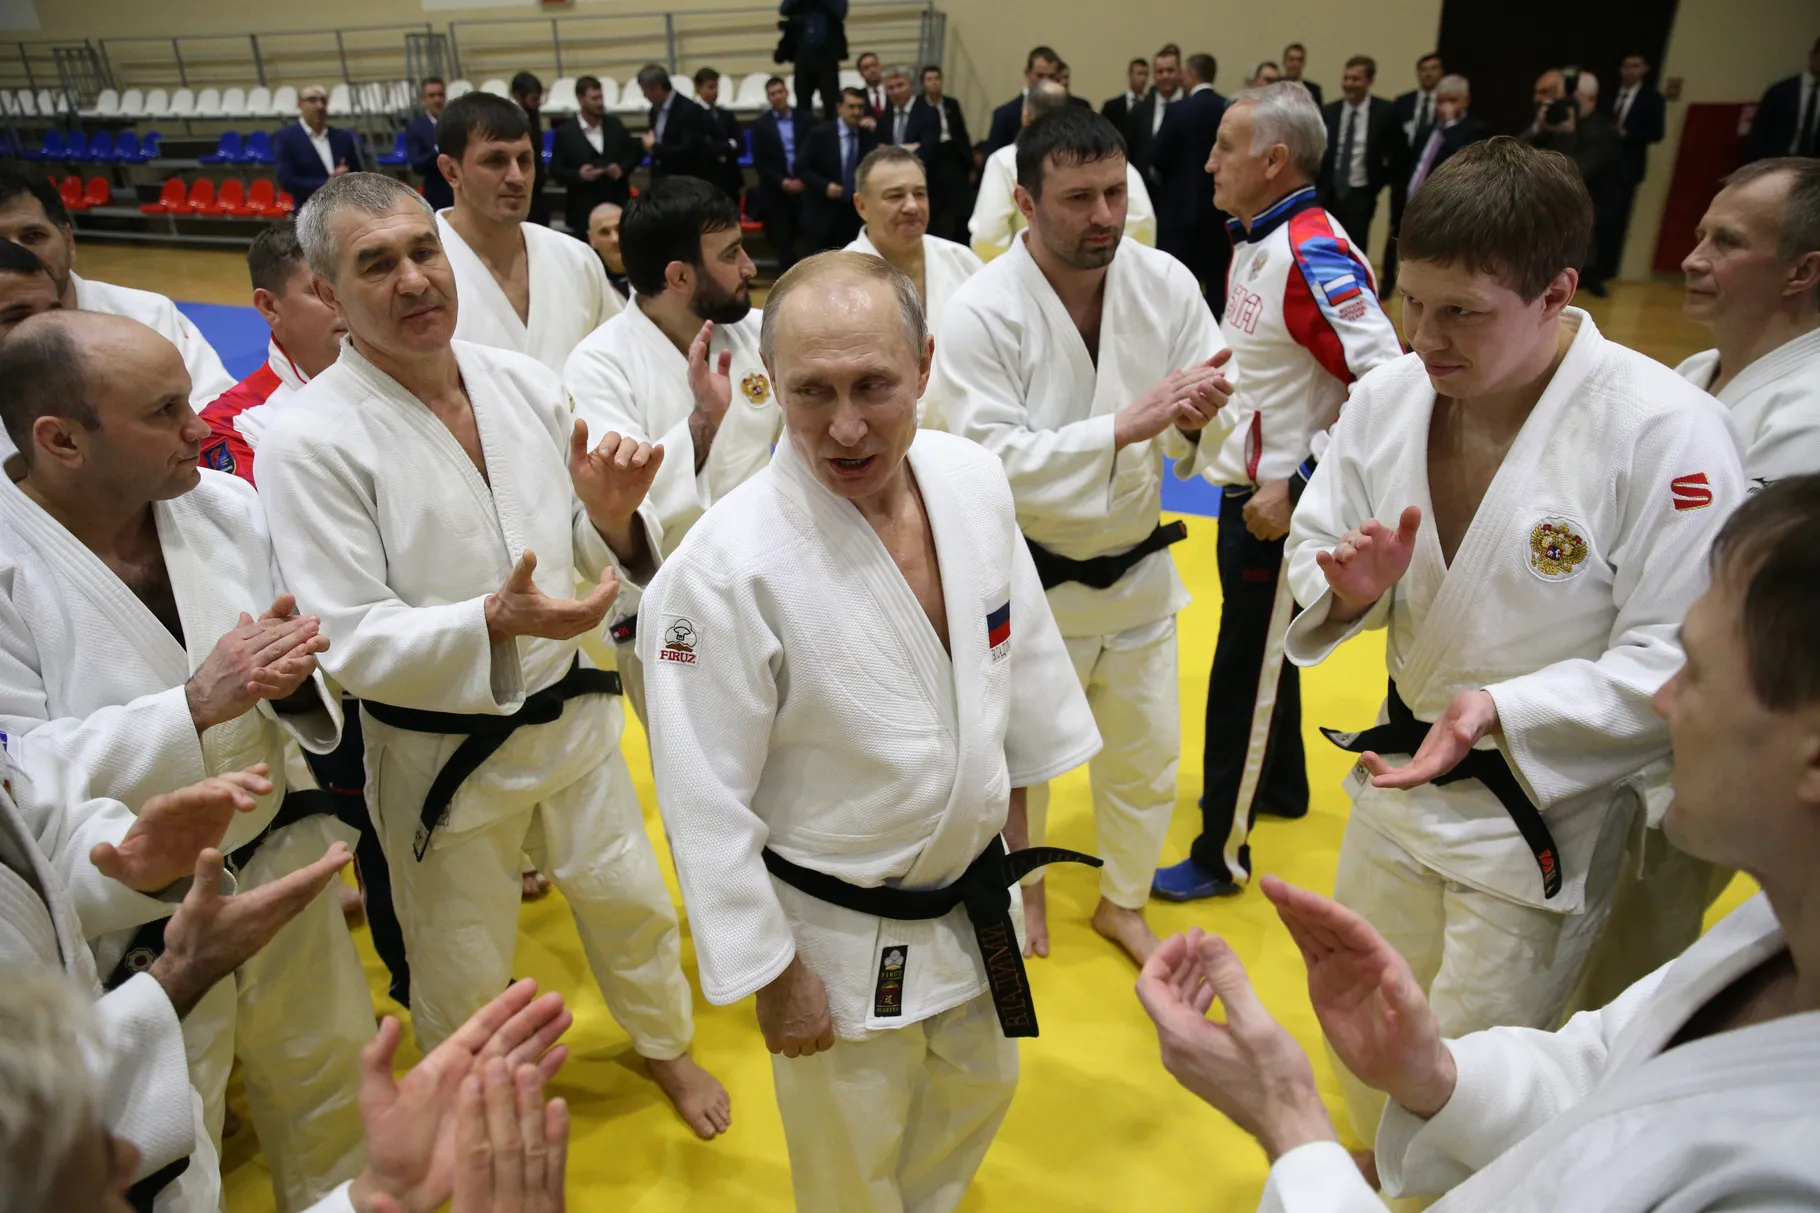 Putin taekwondo black belt